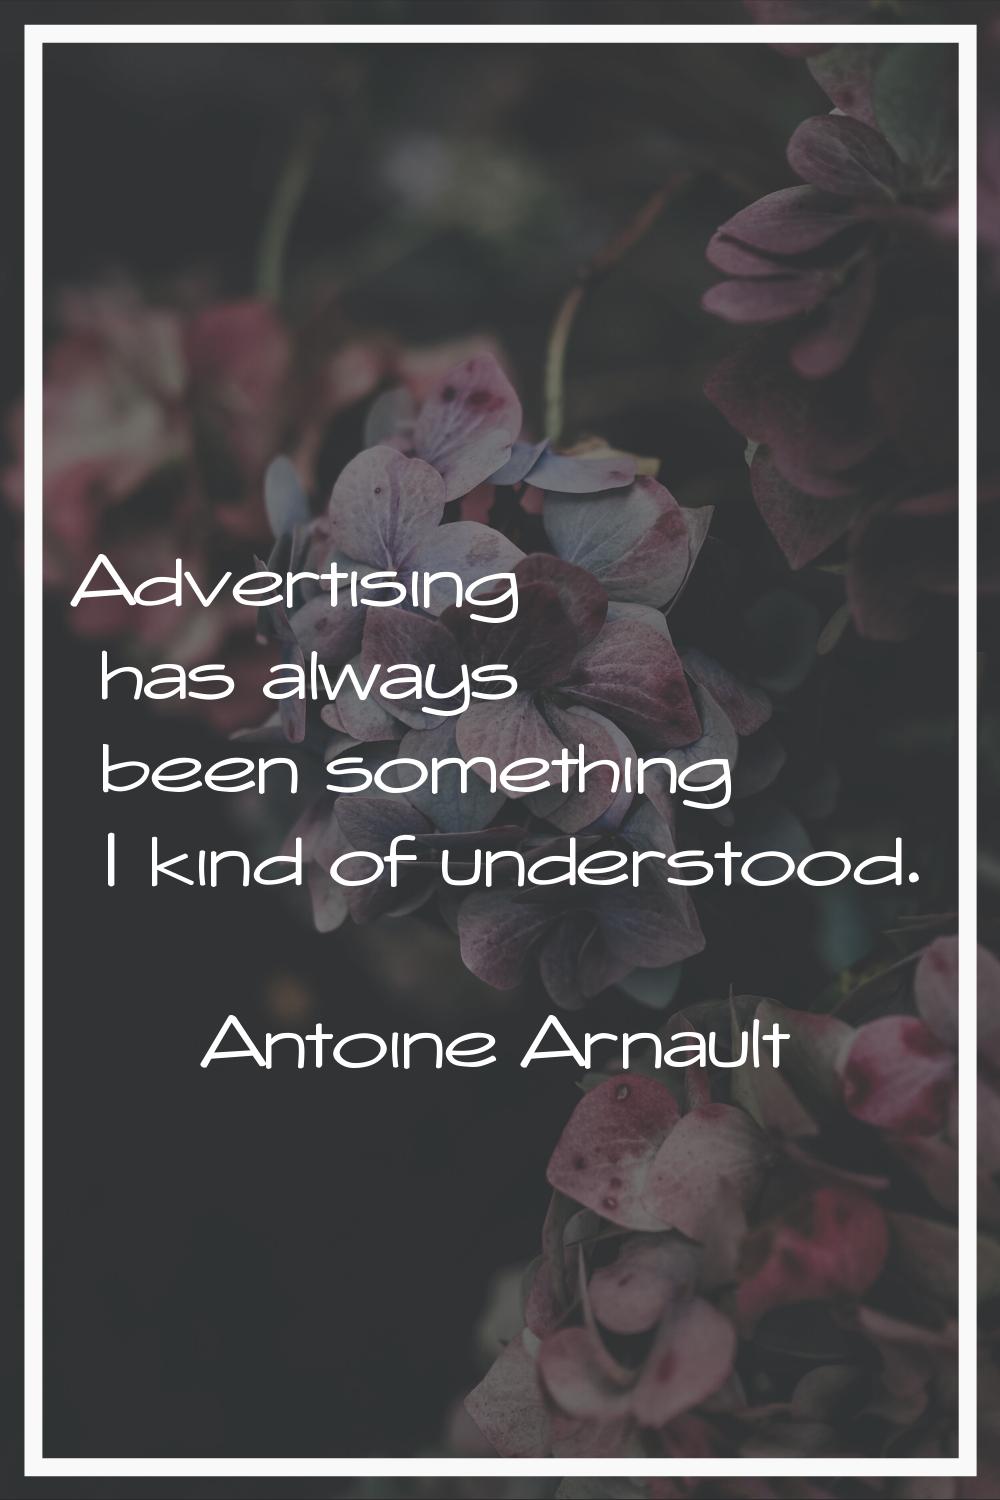 Advertising has always been something I kind of understood.